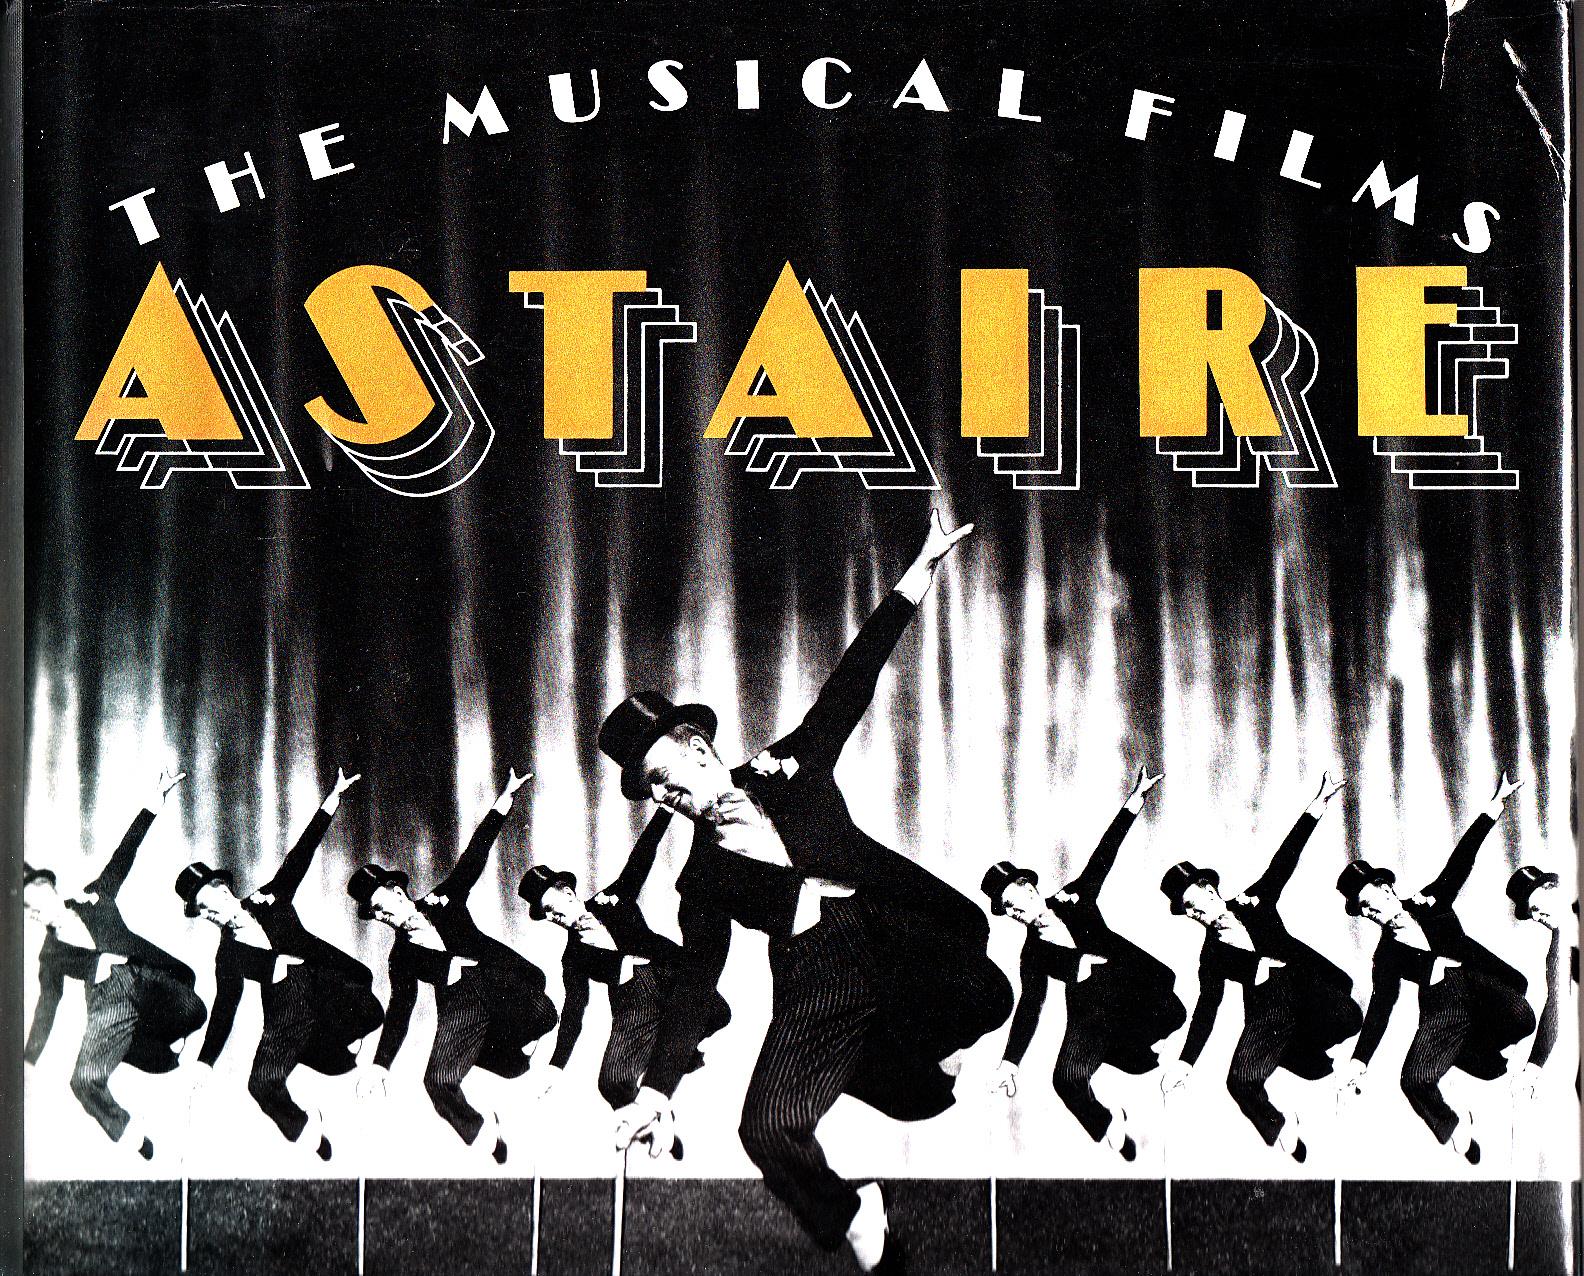 Astaire Dancing - Mueller, John